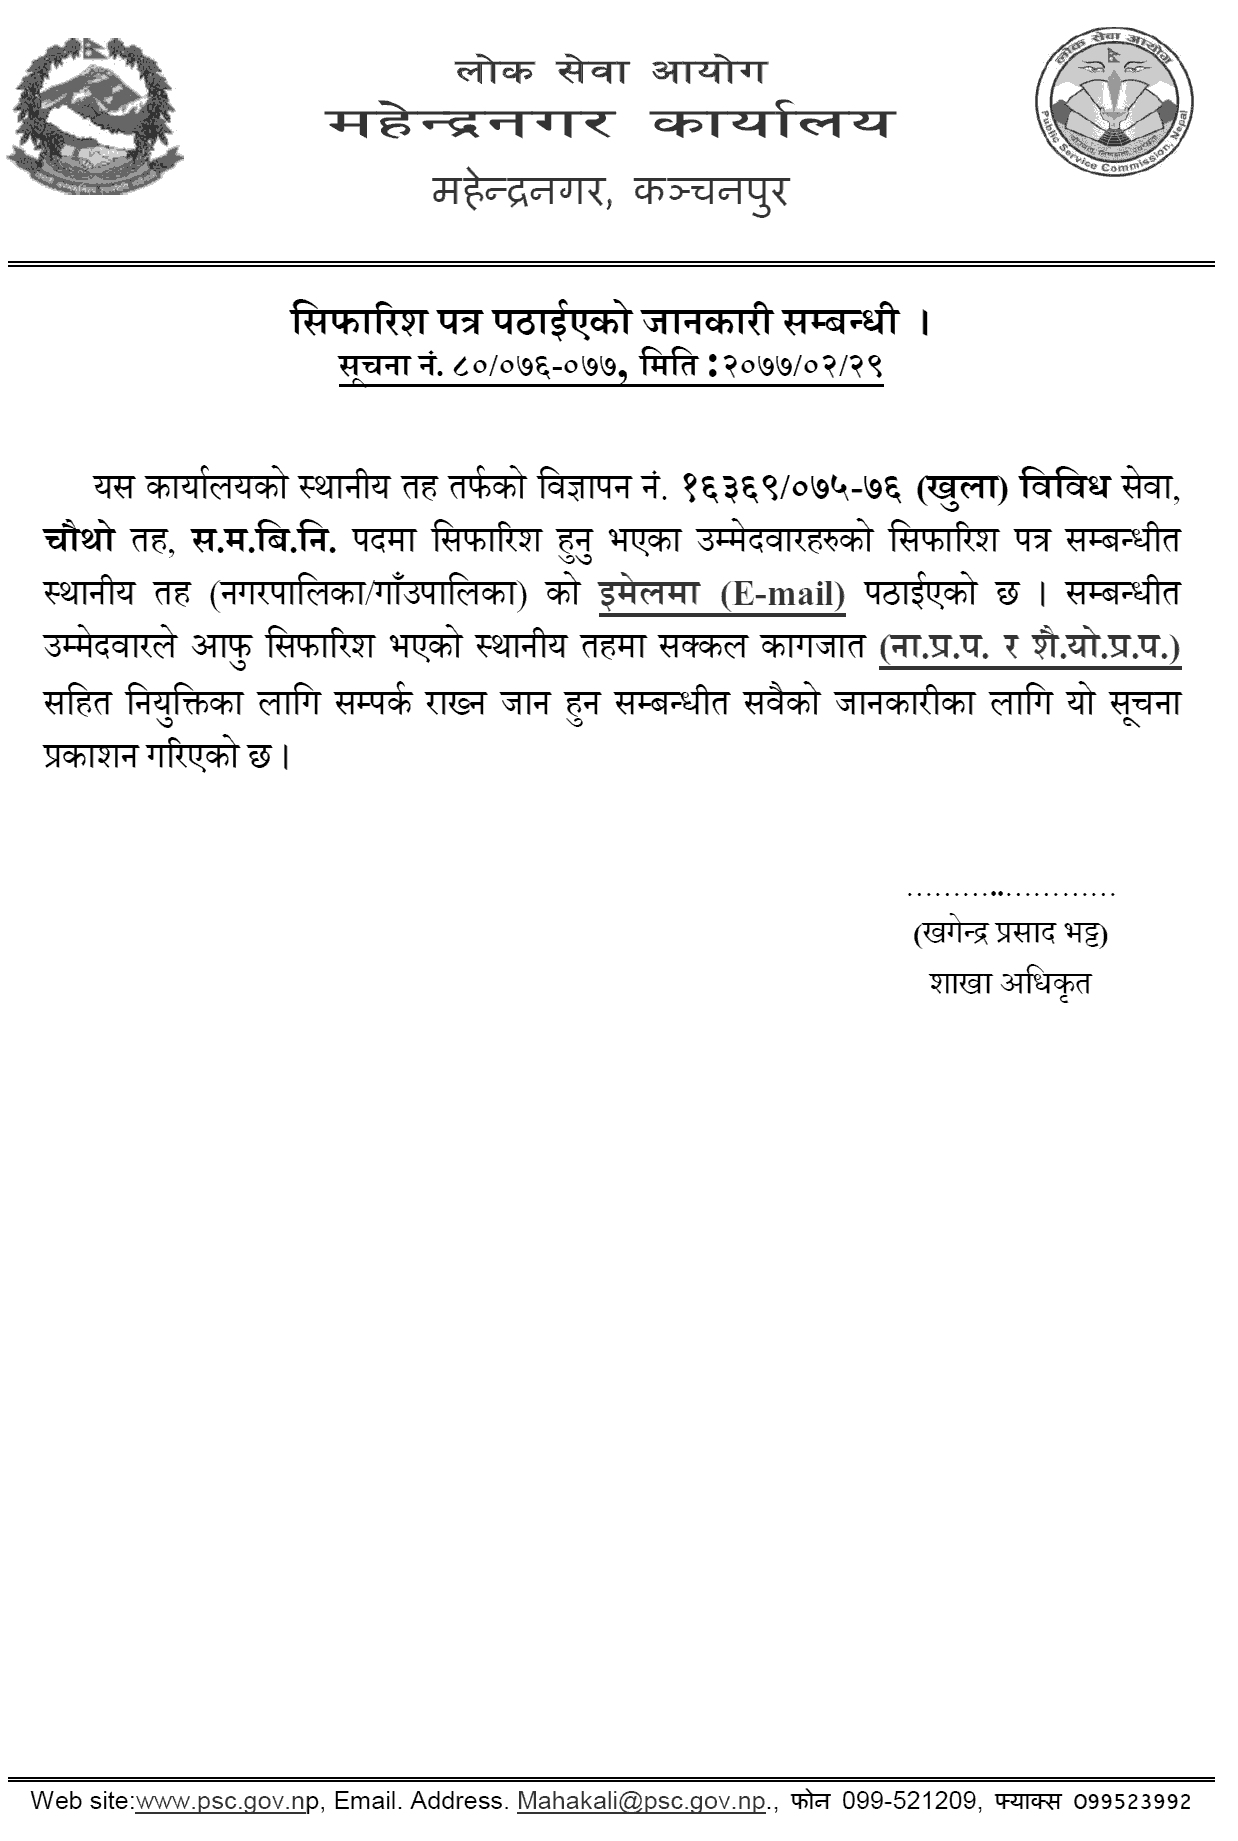 Lok Sewa Aayog Mahendranagar Notice Regarding the Recommendation Letter of 4th MaBiSaNi